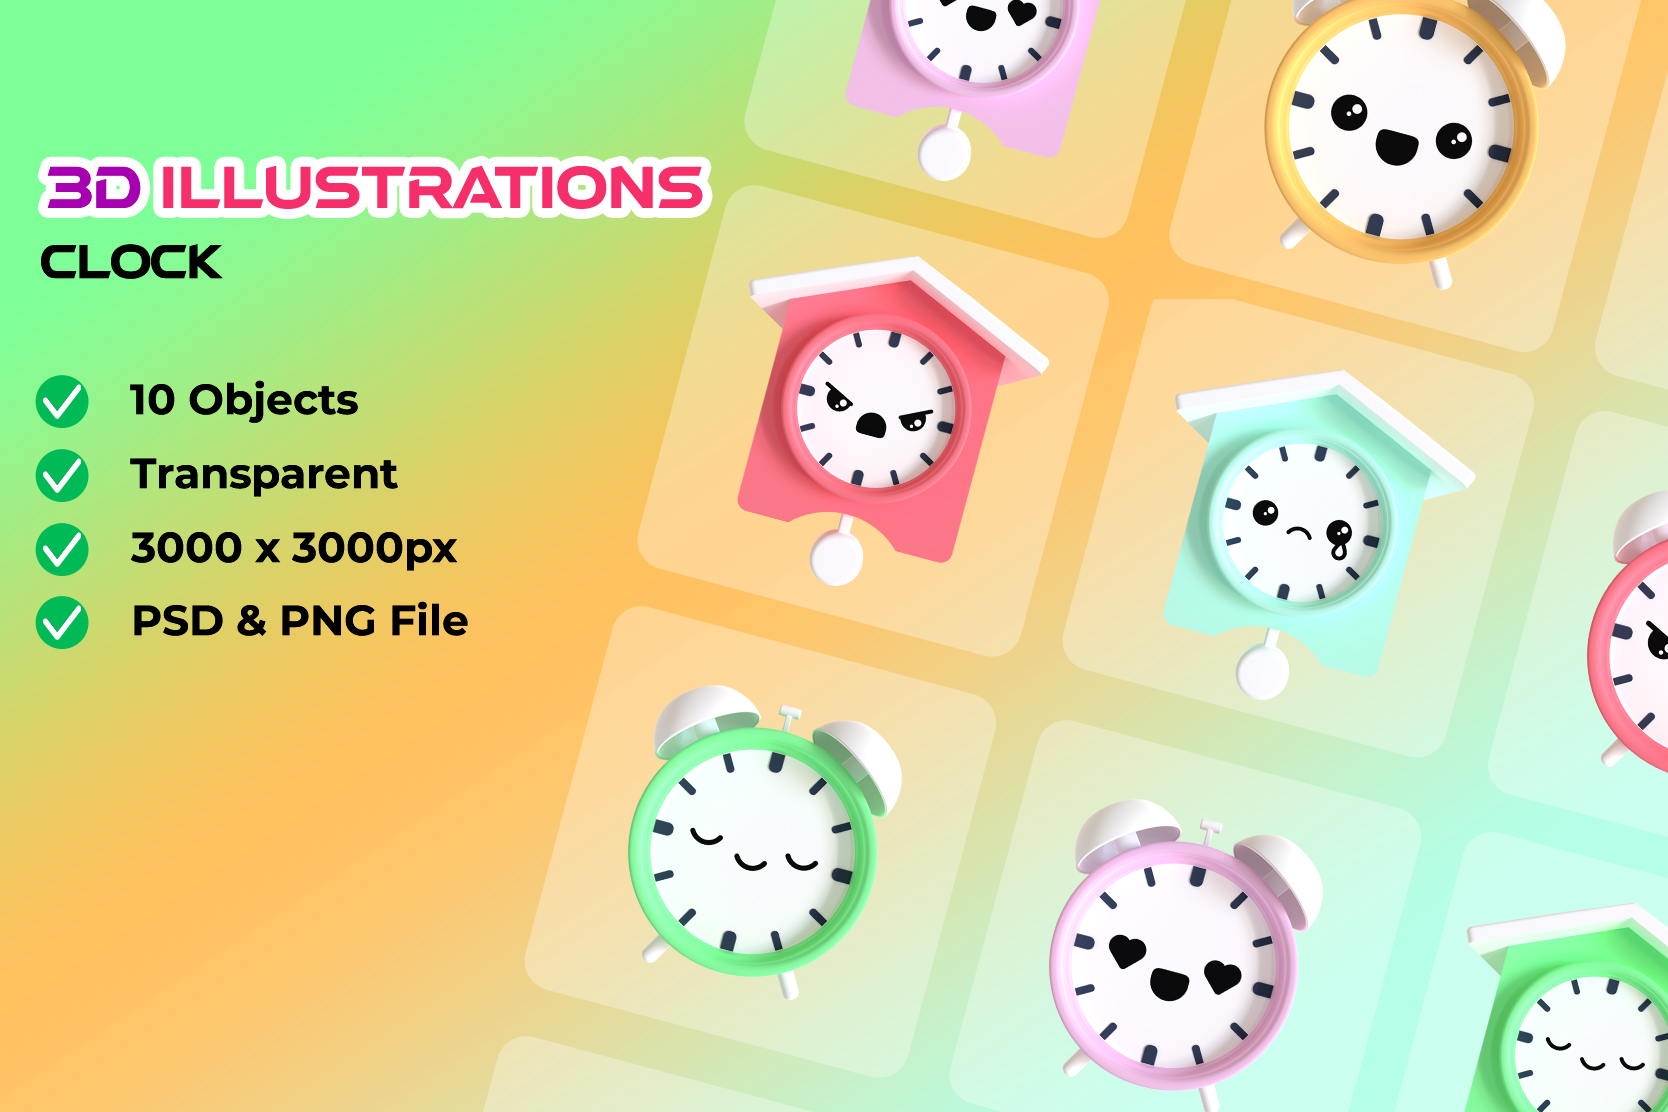 Premium Clock 3D Illustration pack from Miscellaneous 3D Illustrations